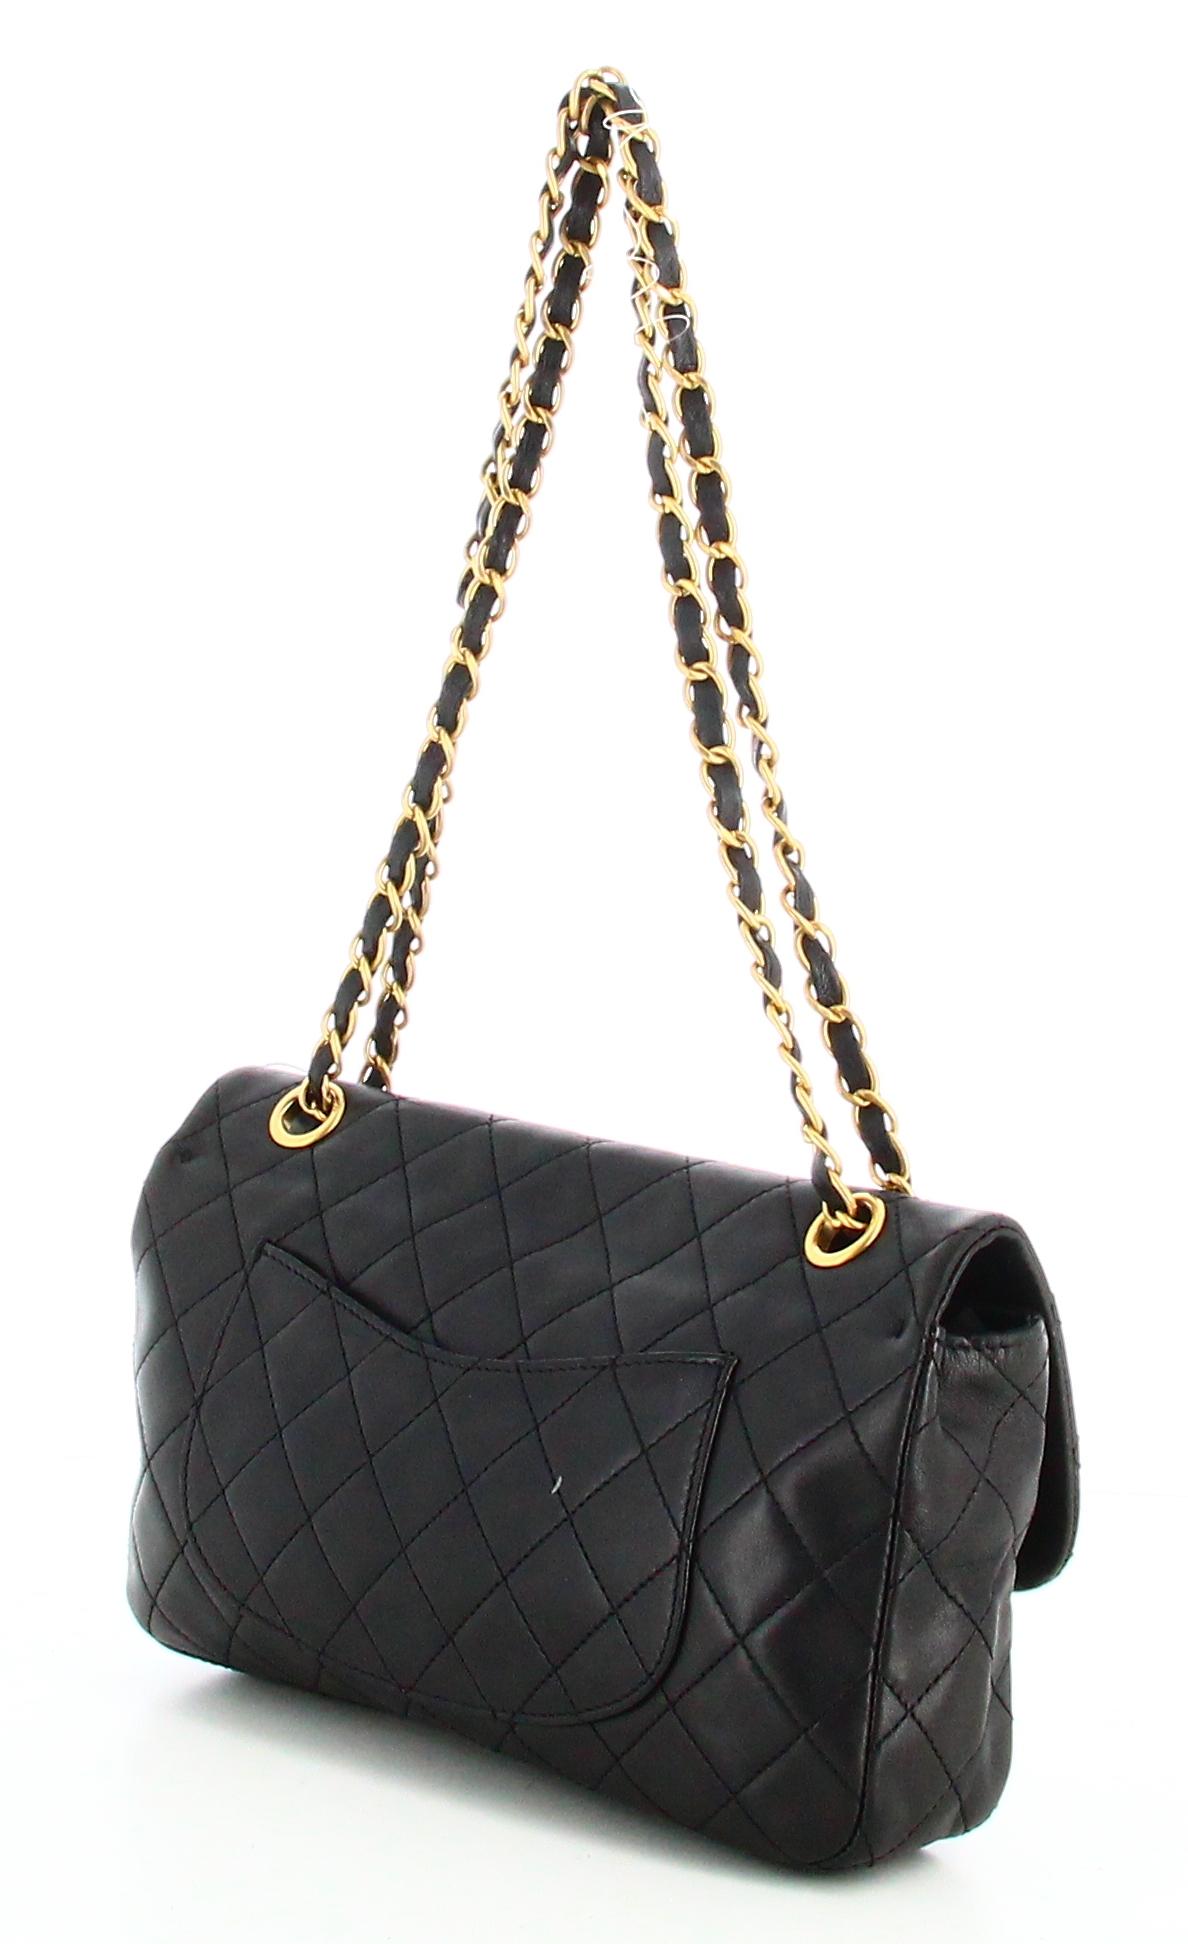 2010 Chanel Medium Classic Lambskin Single Flap Handbag For Sale 1